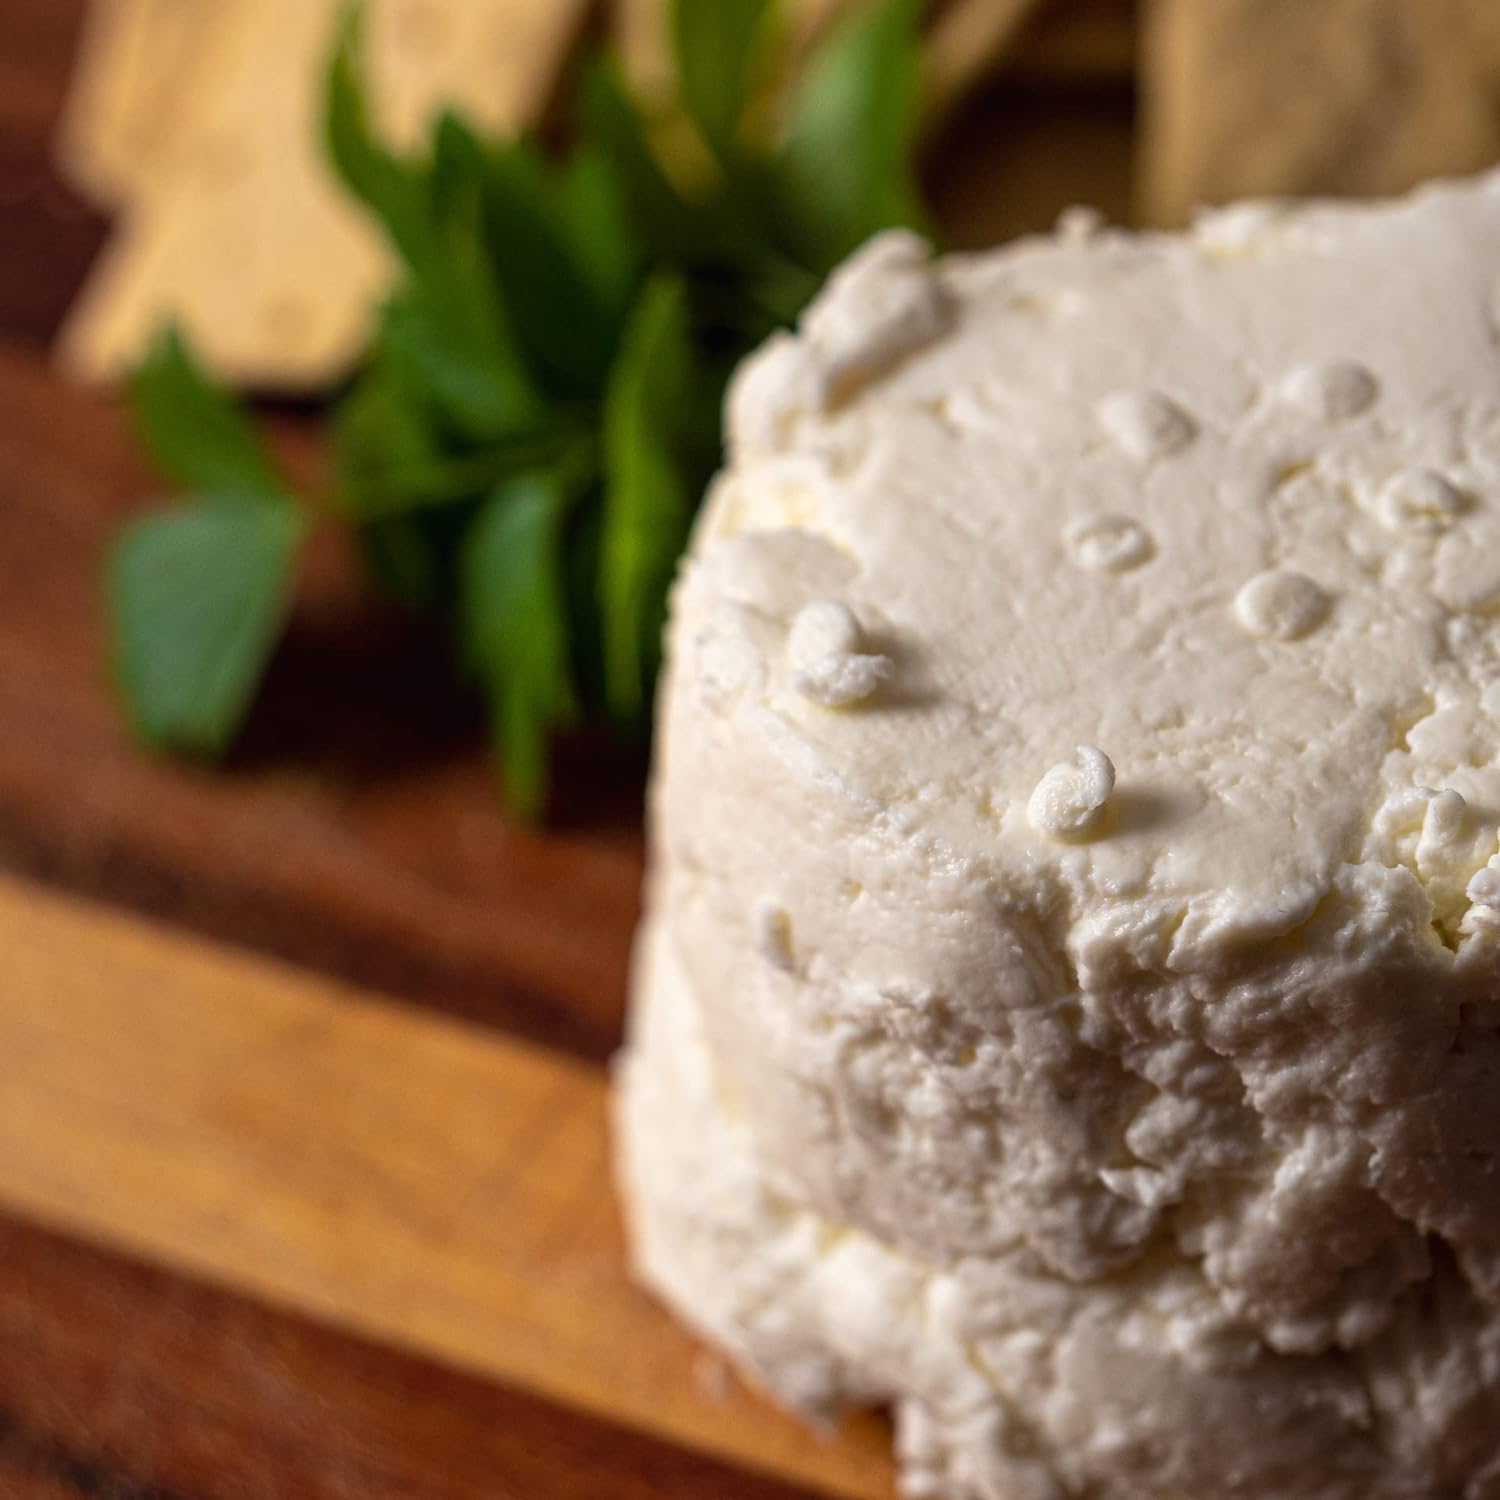 Cultures for Health Mesophilic Starter Bundle | Includes Mesophilic Cheese + Heirloom Yogurt Starter Culture | No Yogurt Maker Required, Cultures at Room Temperature | Yogurt & Cheesemaking DIY Kit